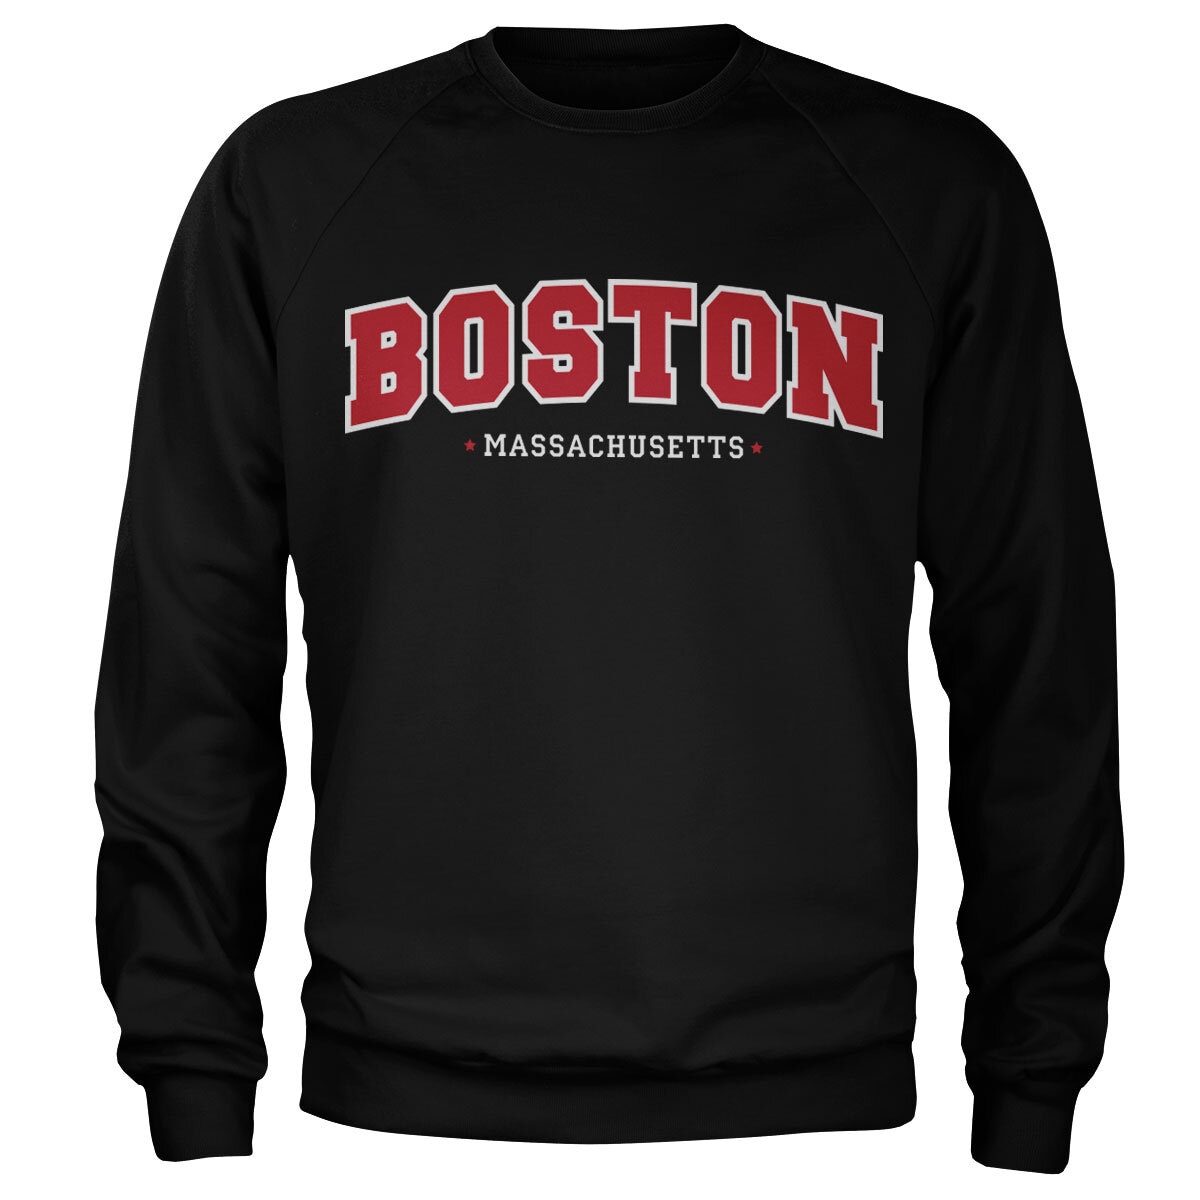 Boston - Massachusetts Sweatshirt